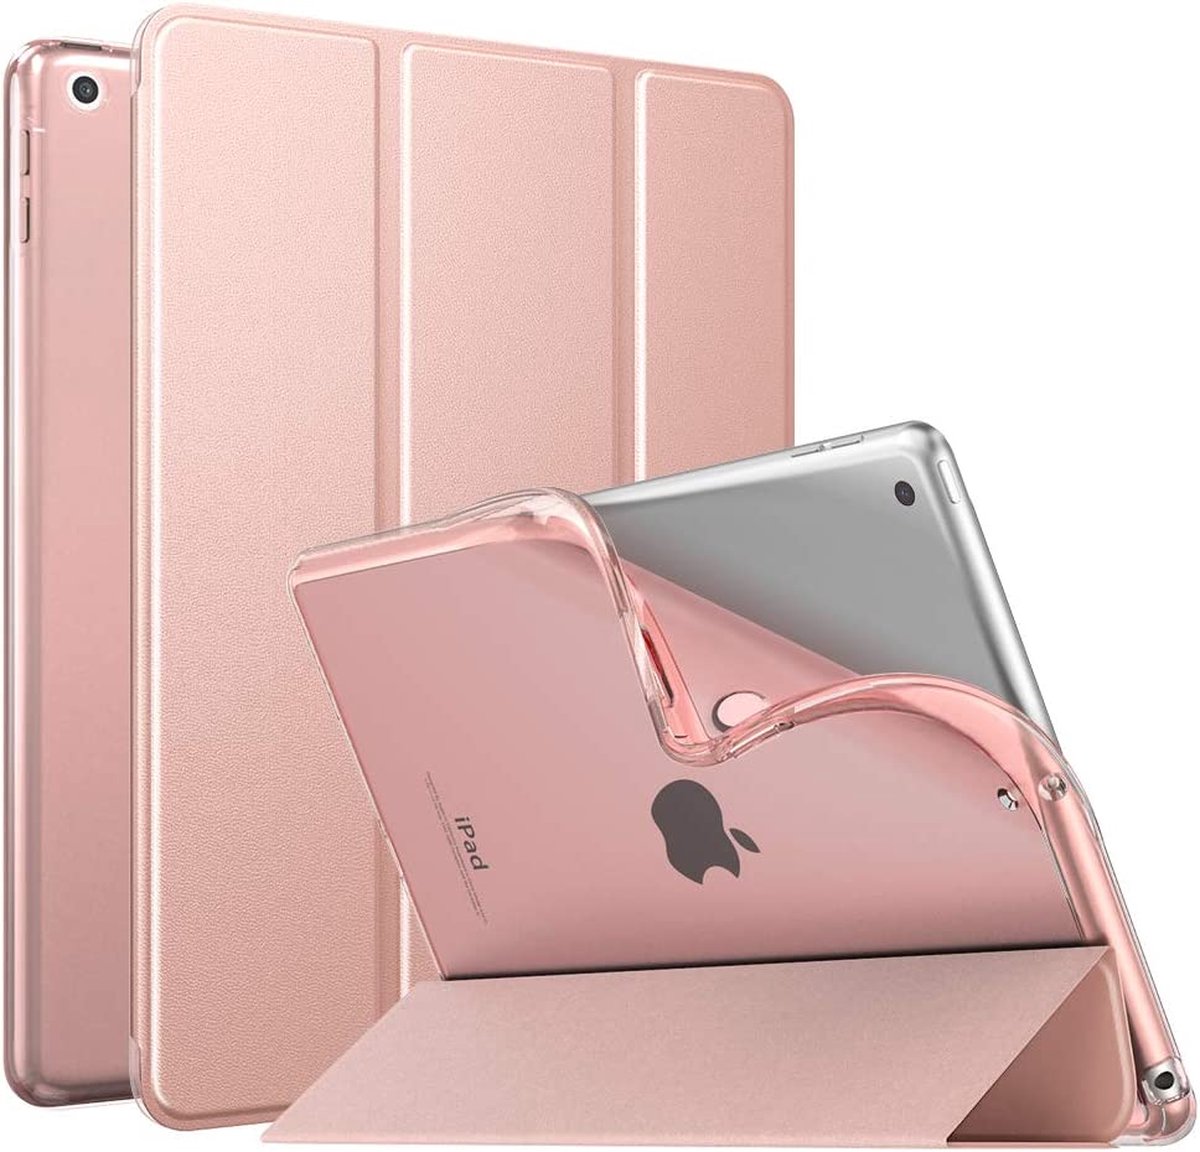 Case Fit iPad 2019, slanke Smart Shell met staander, Folio Case met zachte transparante TPU-cover, Frosted Back, roze goud